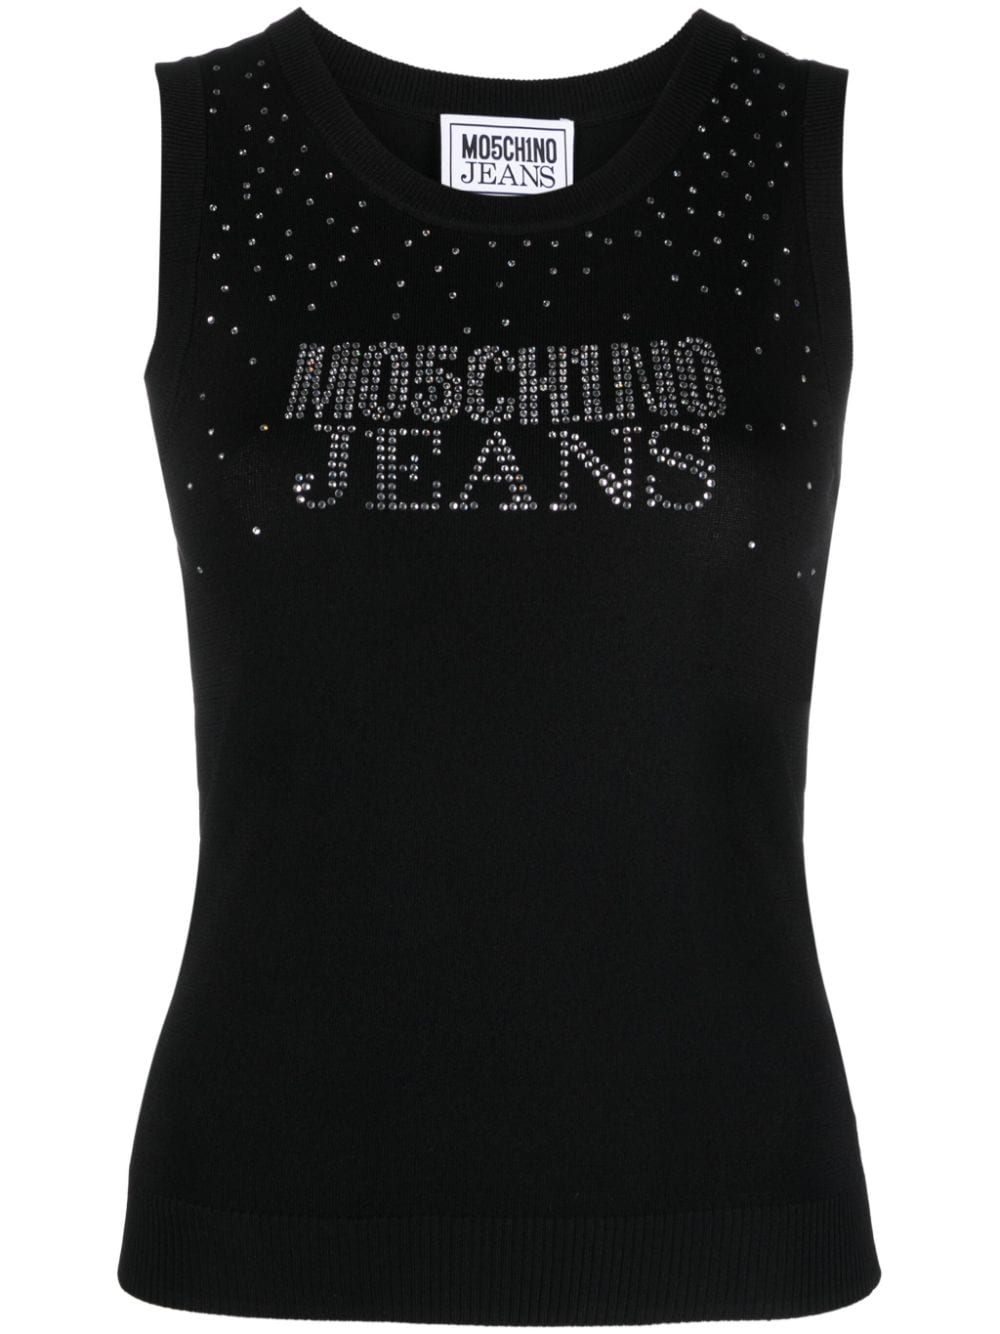 MOSCHINO JEANS logo-embellished tank top - Black von MOSCHINO JEANS